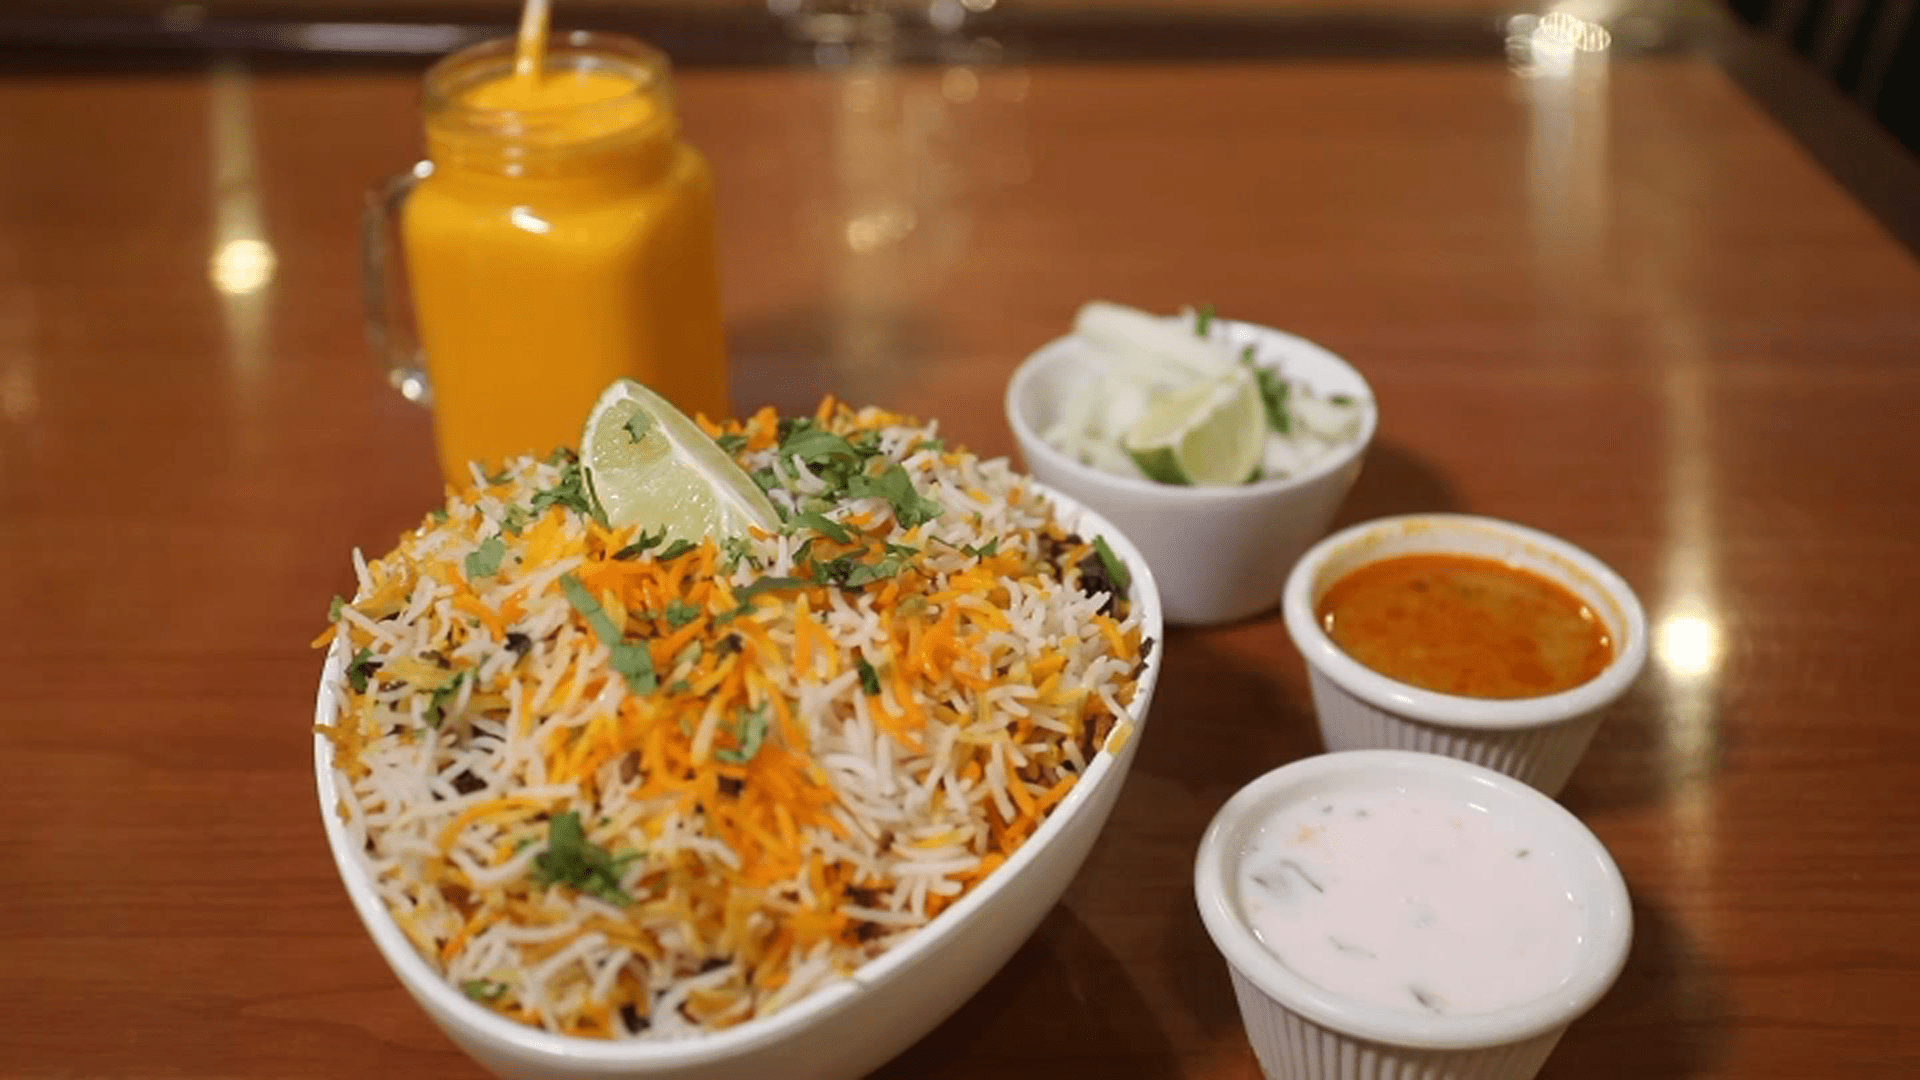 Bawarchi Biryanis Features Unique Indian Dishes – NBC Chicago